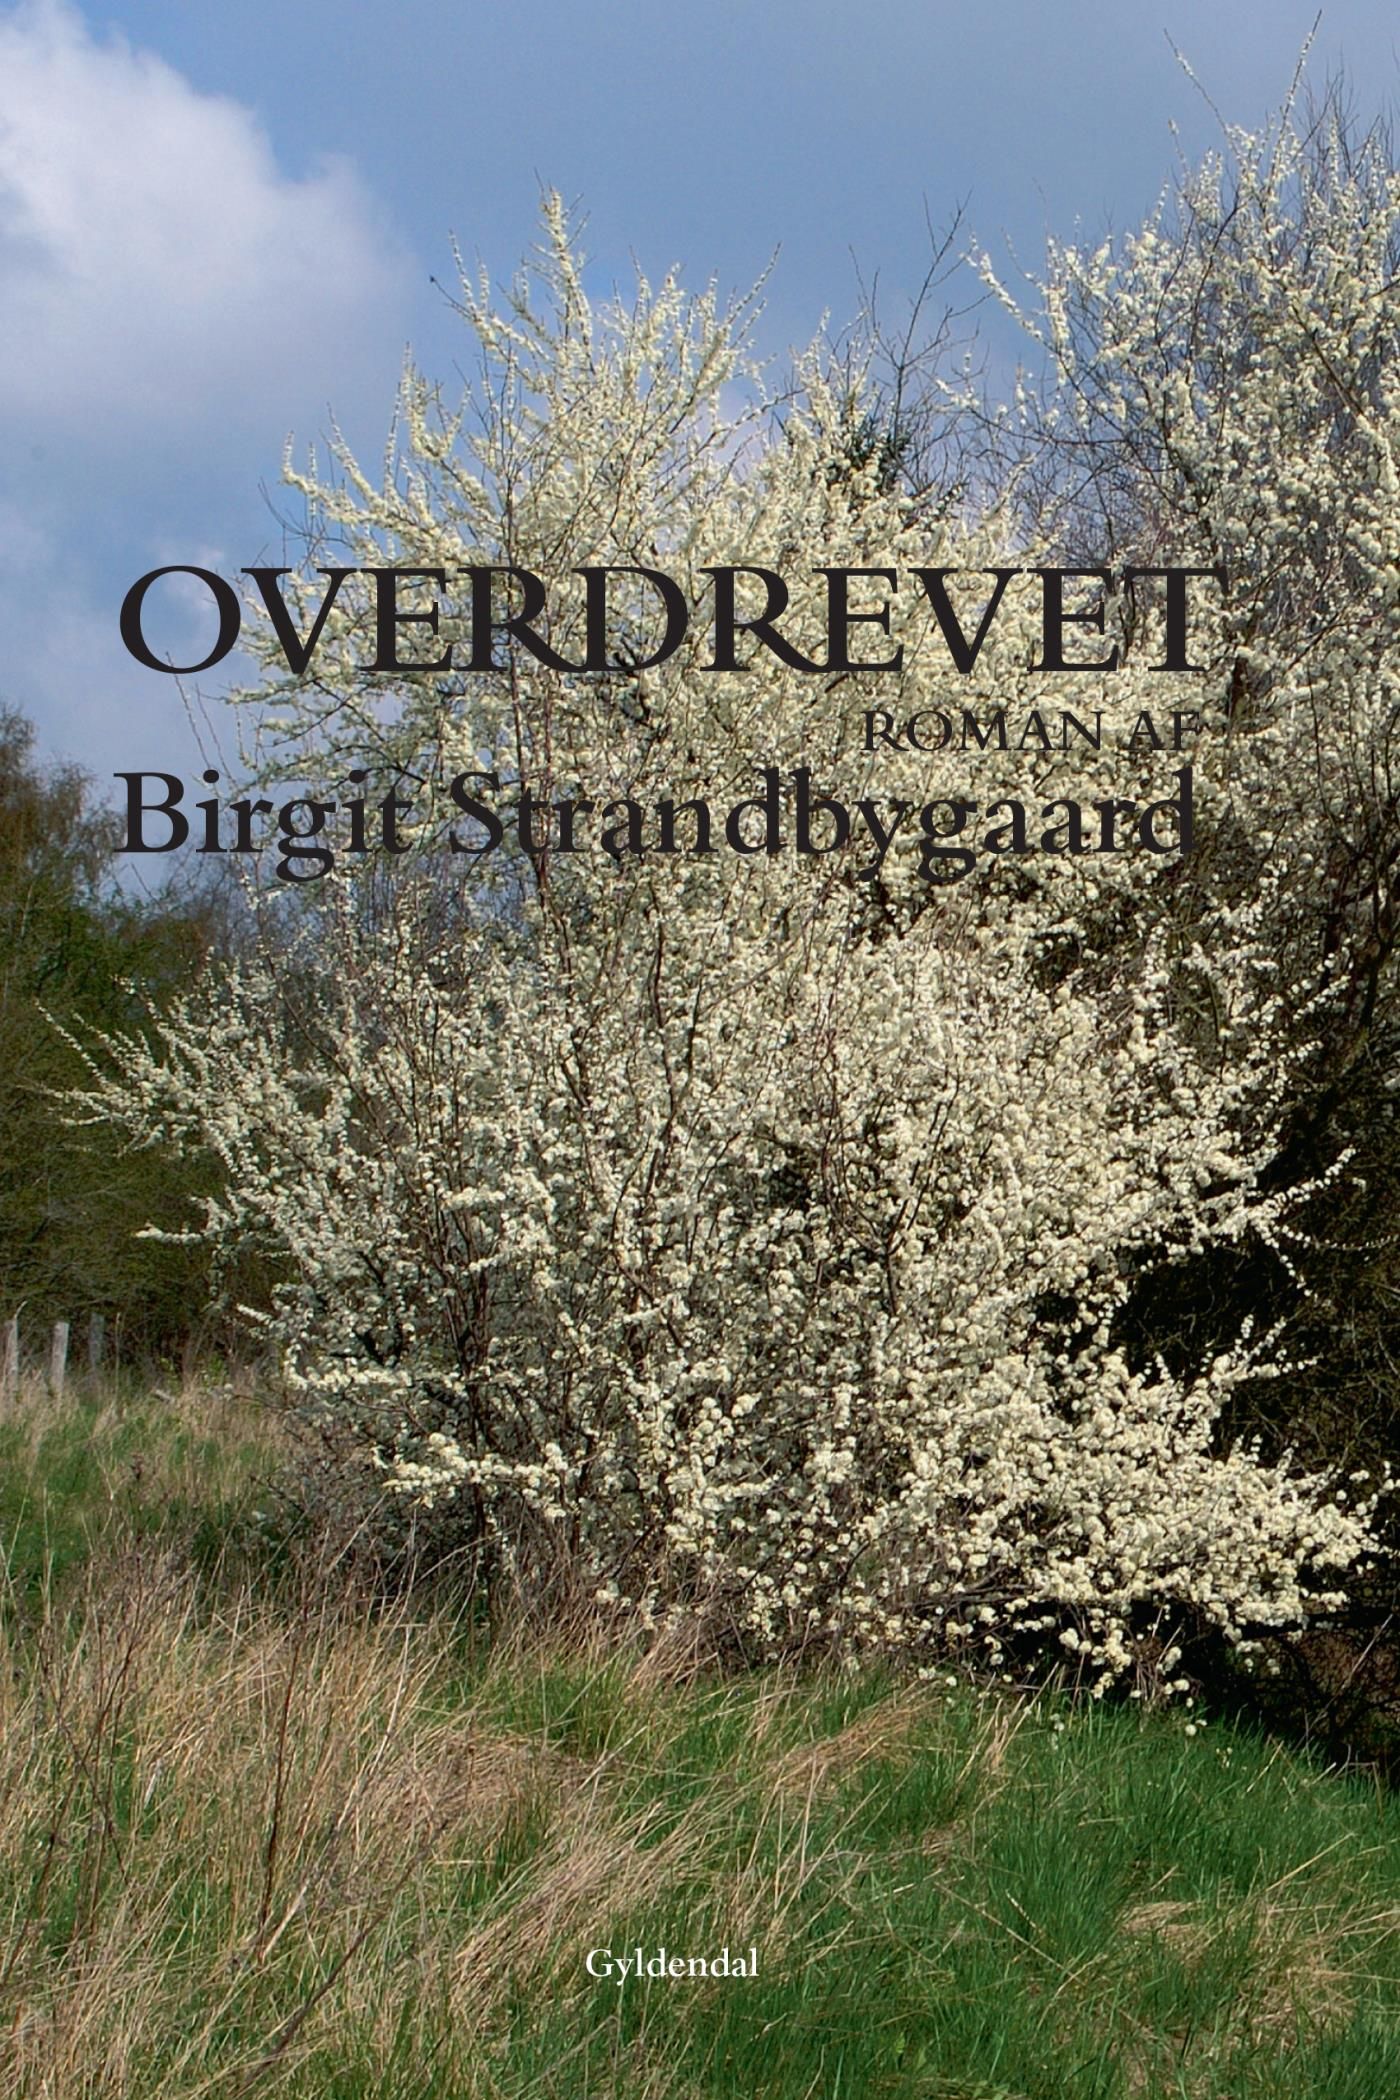 Overdrevet, eBook by Birgit Strandbygaard